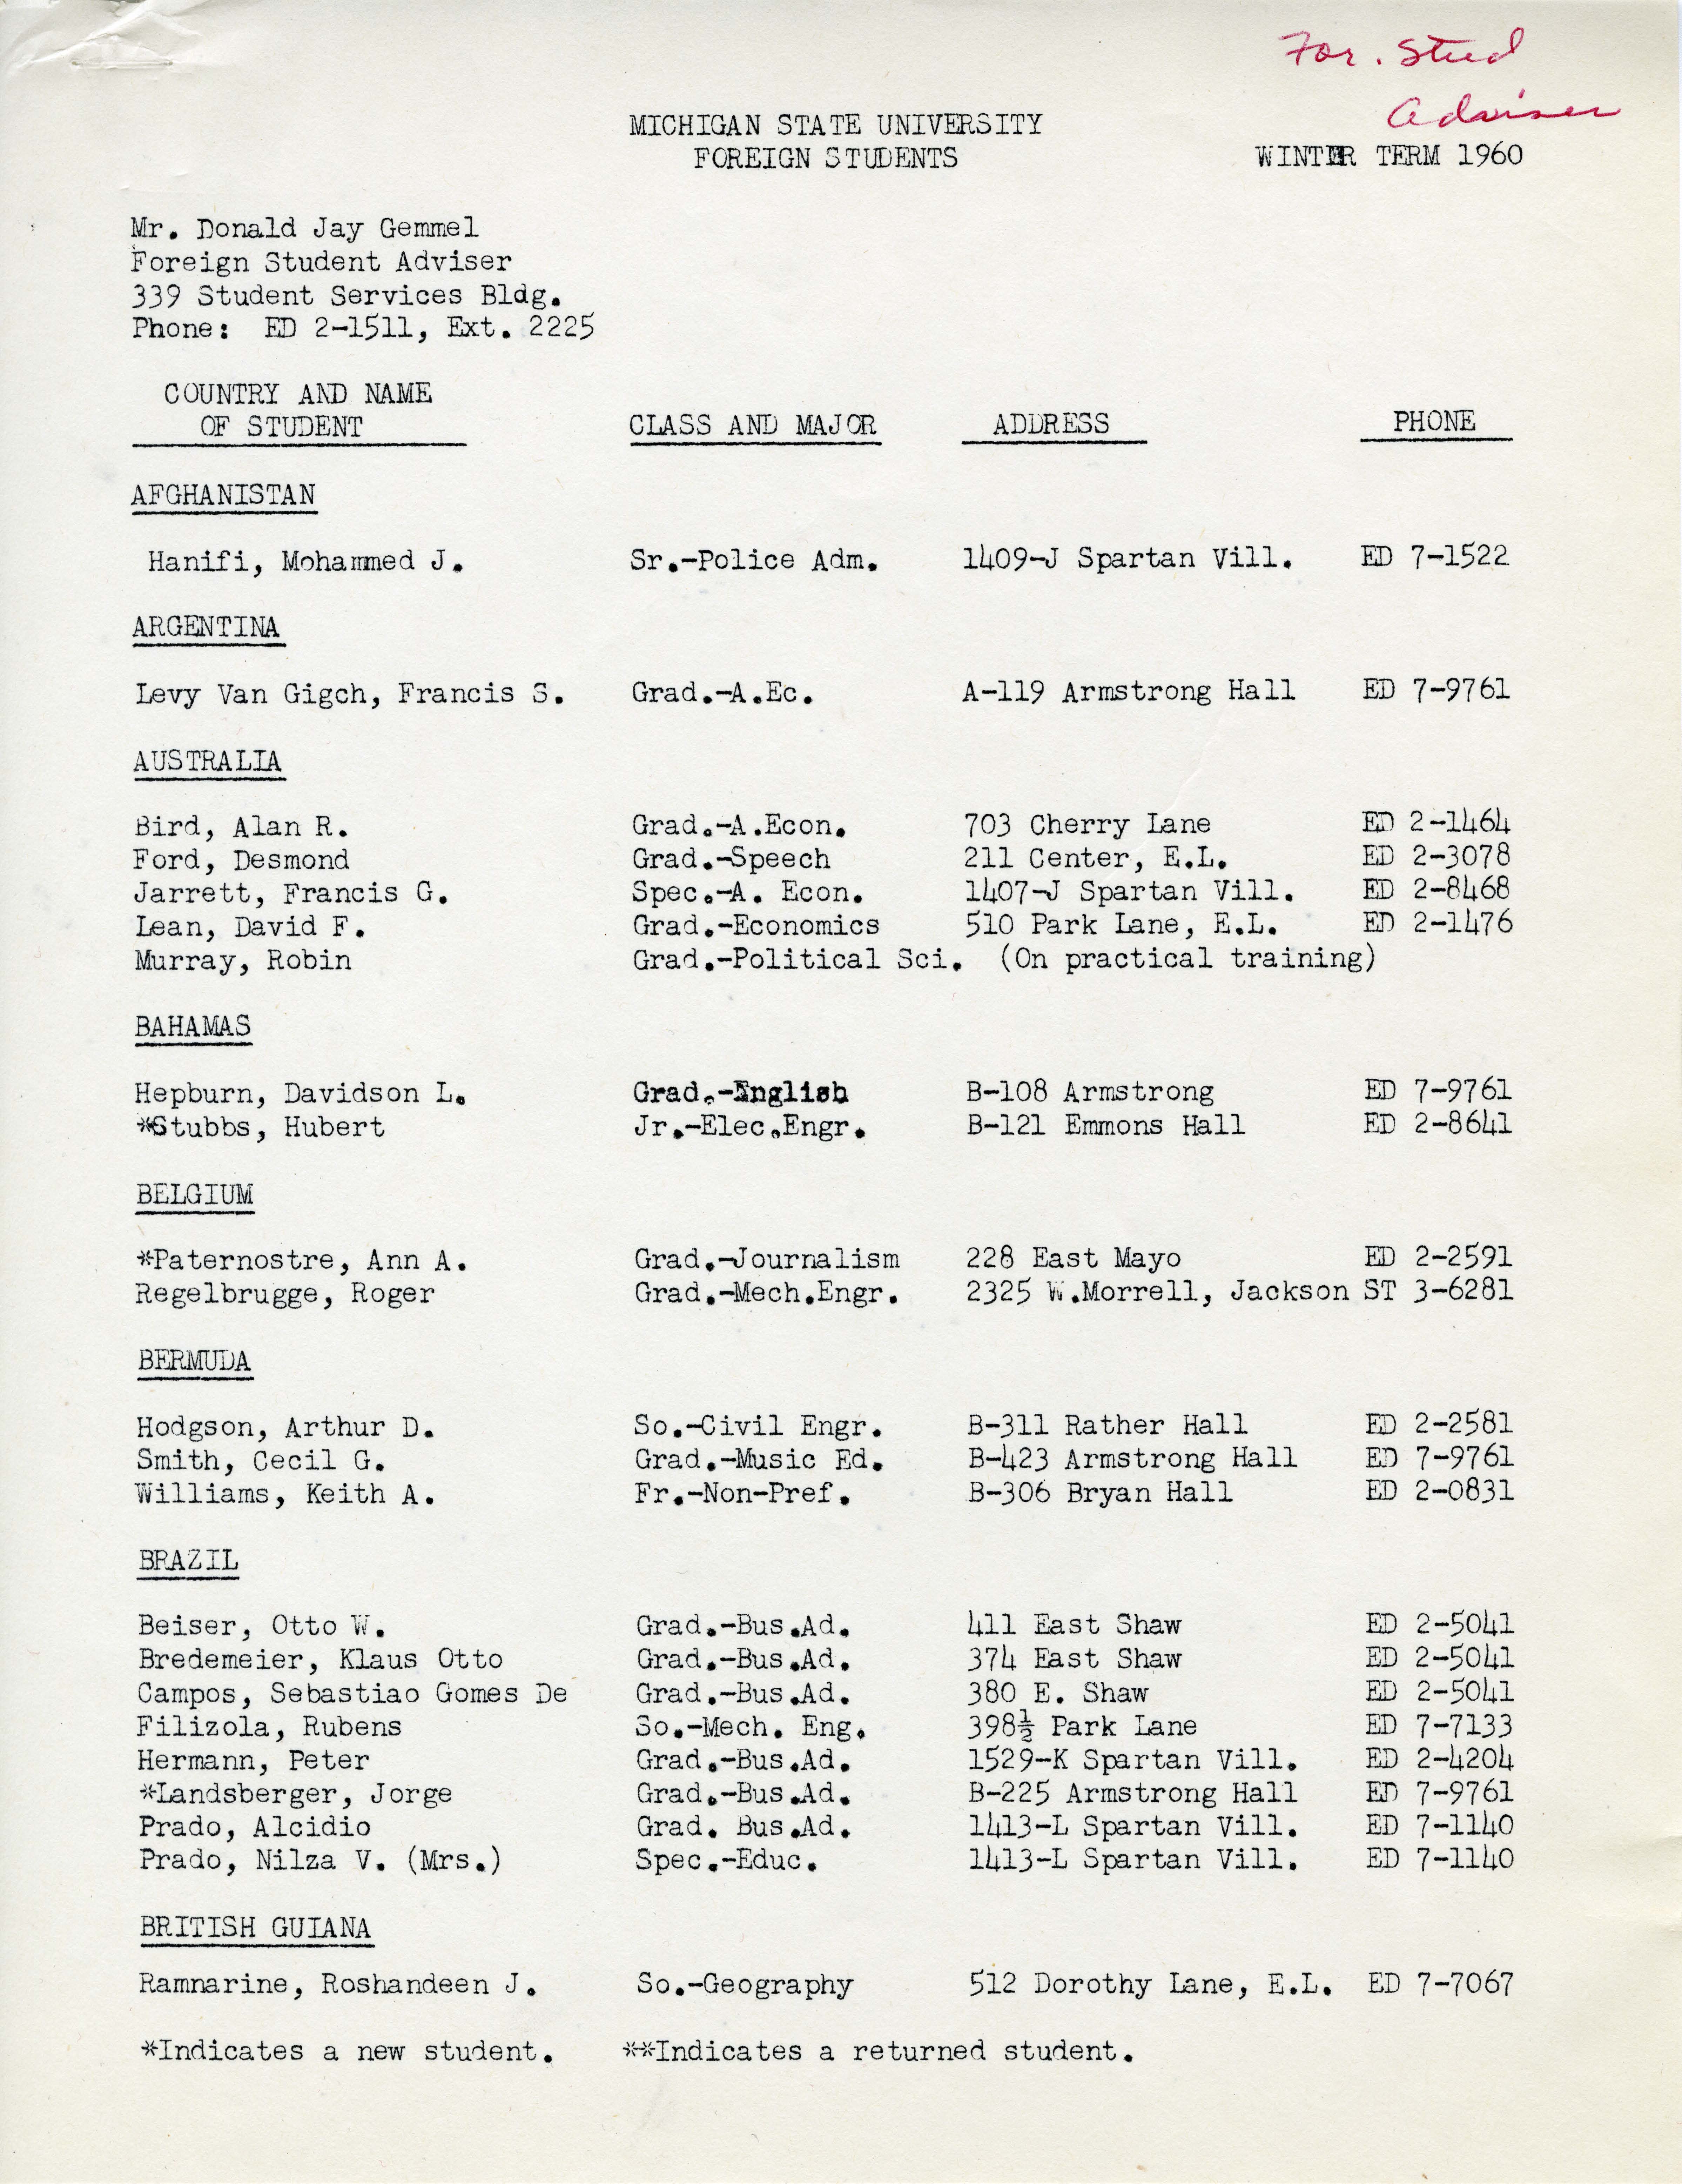 1960 (Winter) International Student Directory